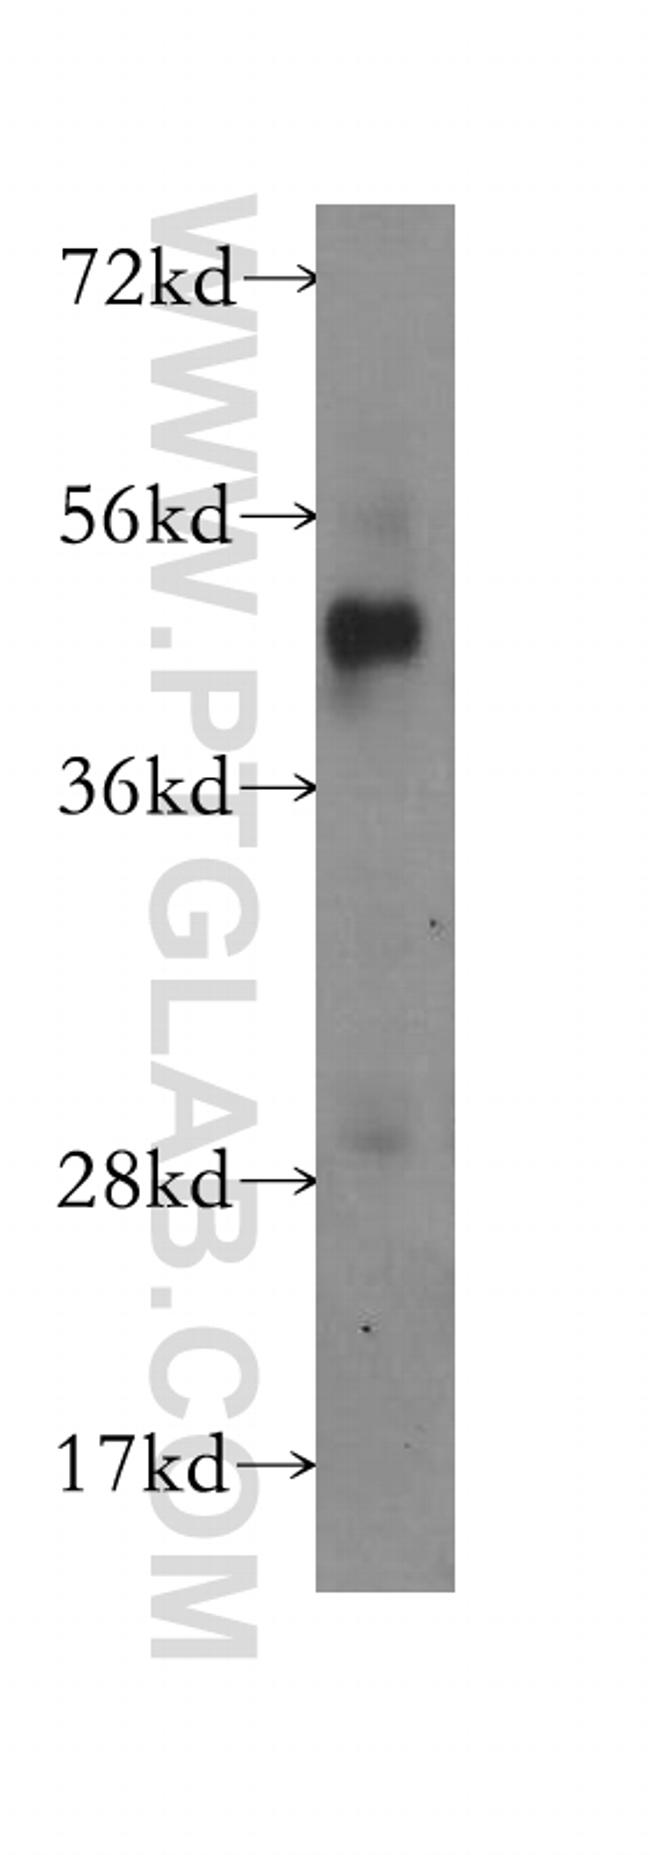 DNAJB2 Antibody in Western Blot (WB)